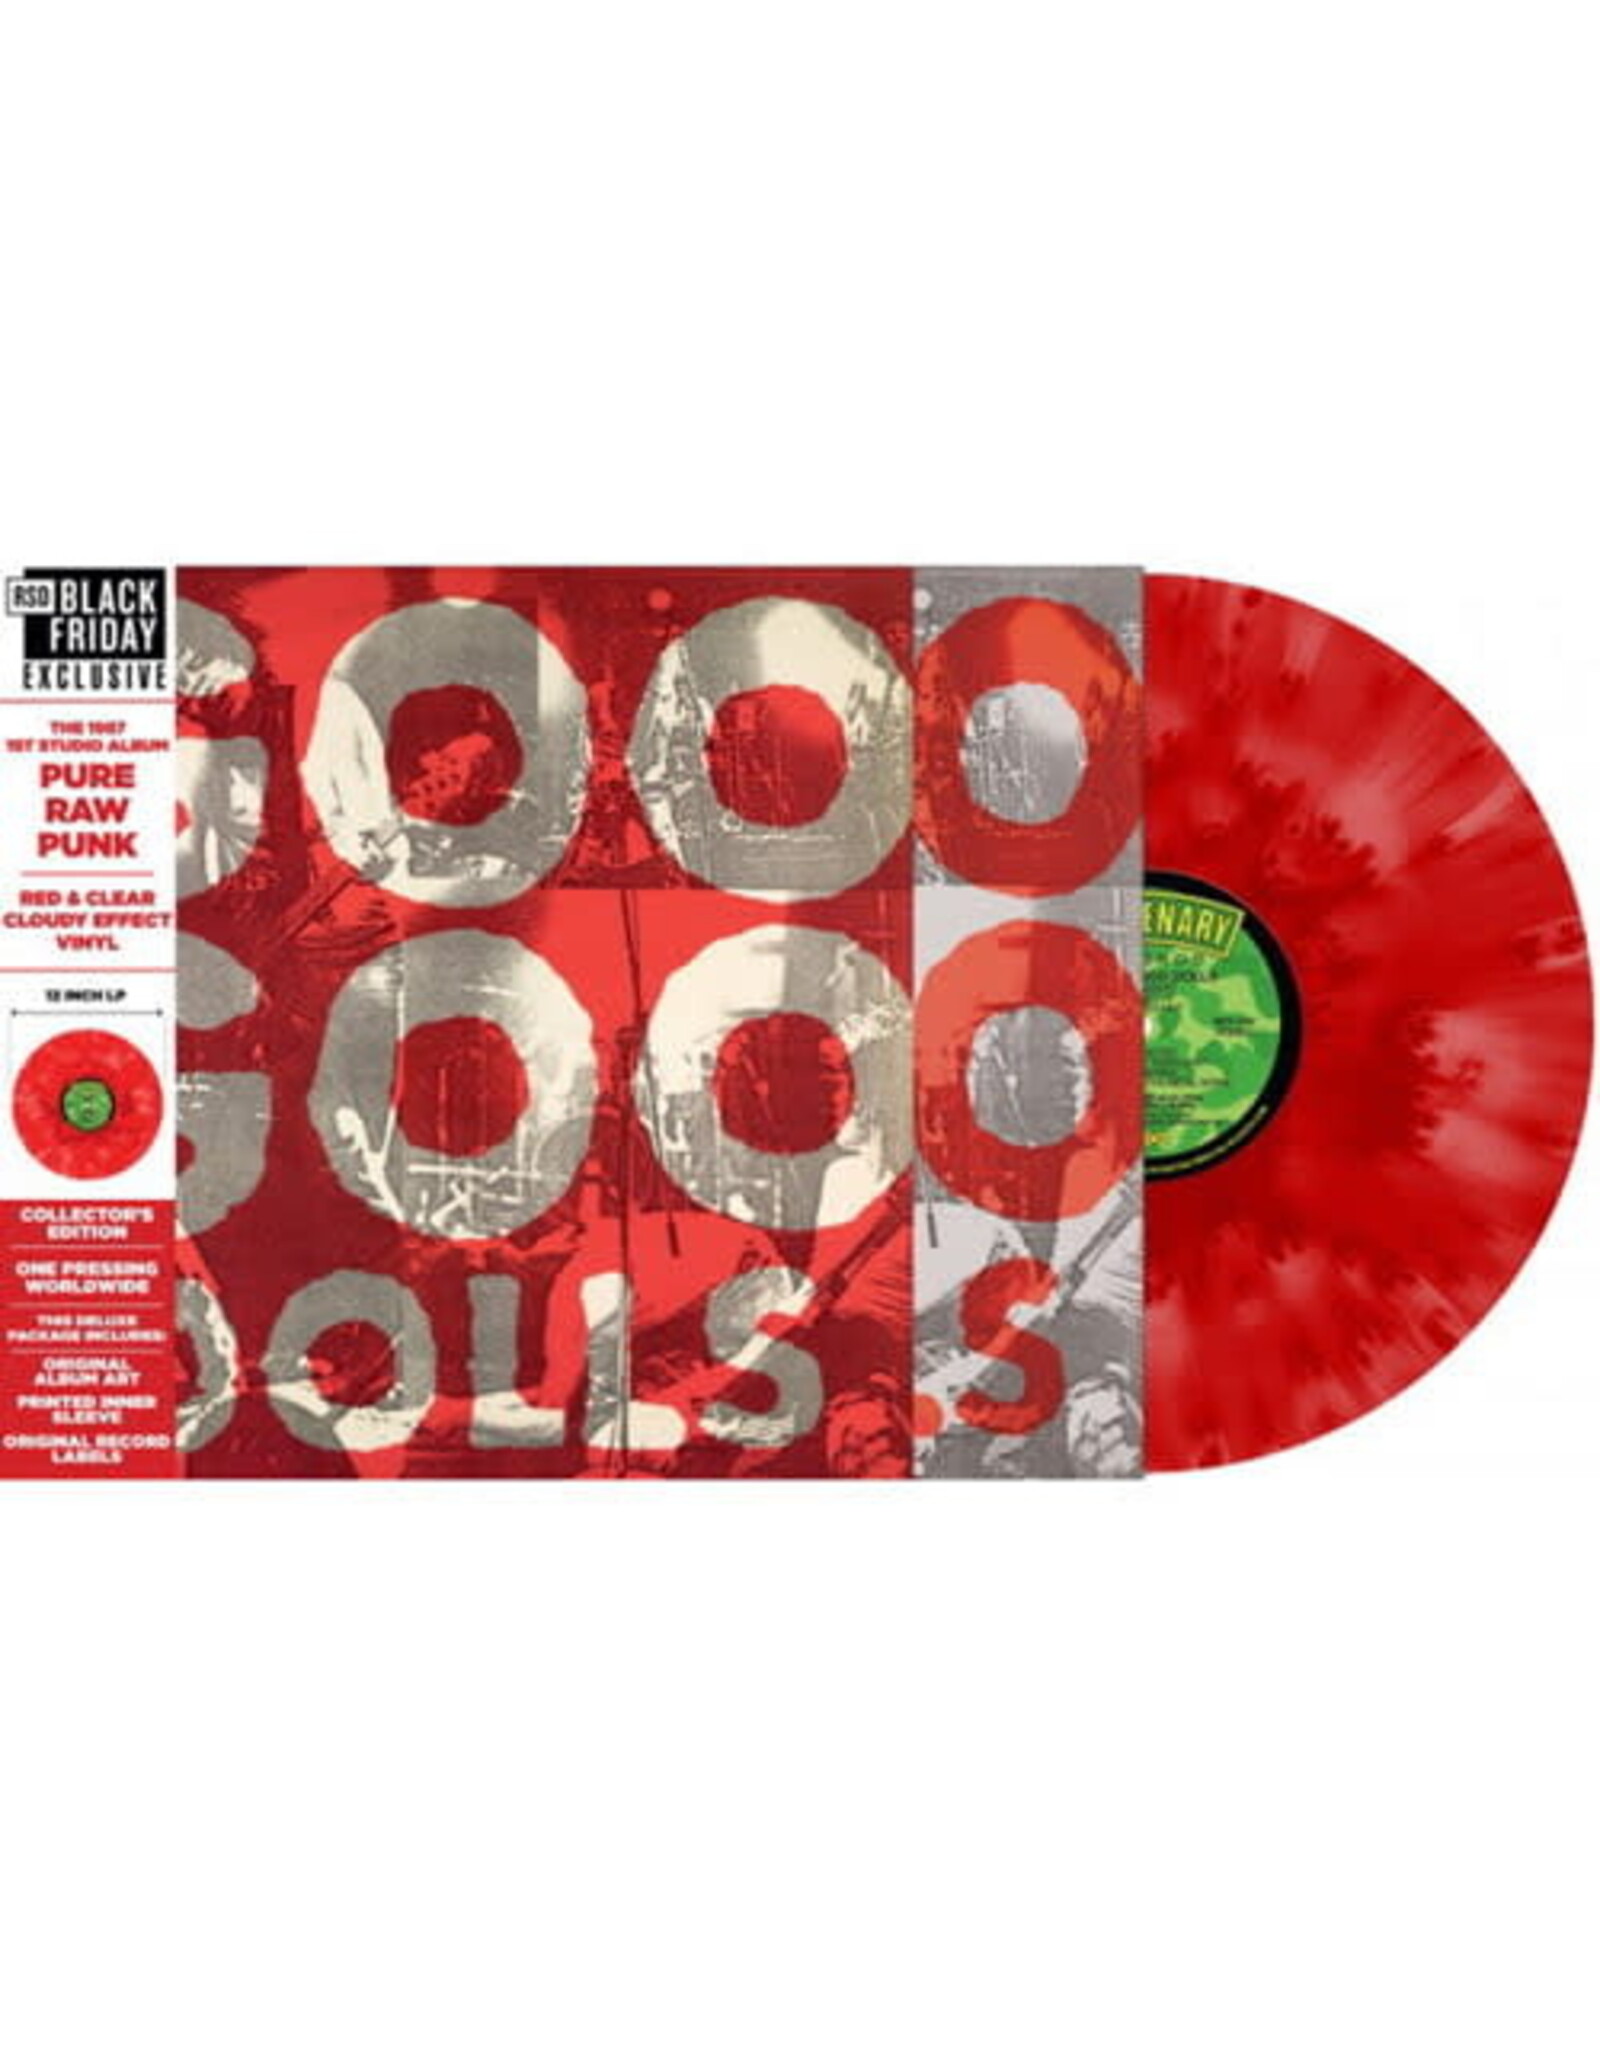 Goo Goo Dolls - Goo Goo Dolls (Exclusive Red & Clear Vinyl]